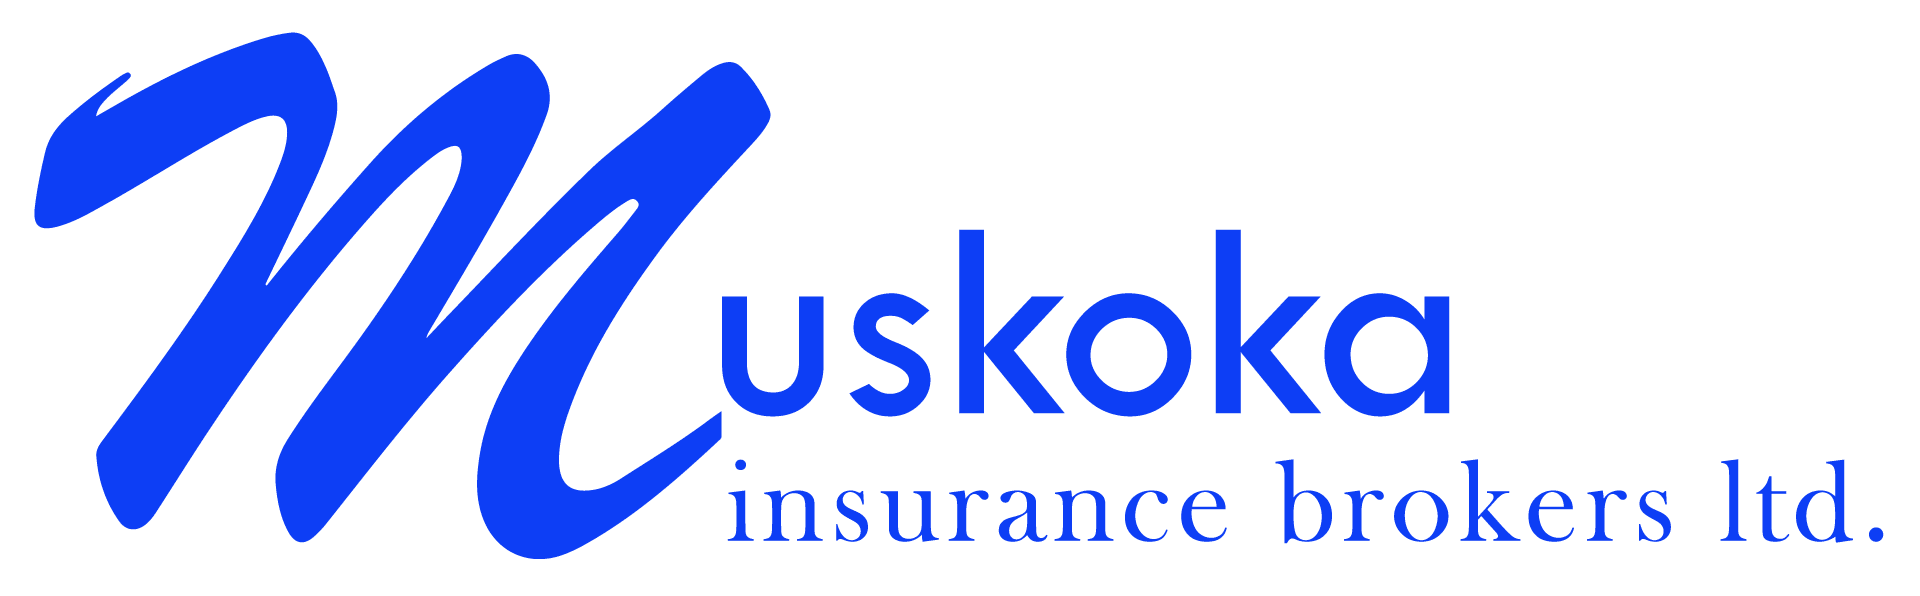 Muskoka Insurance Brokers